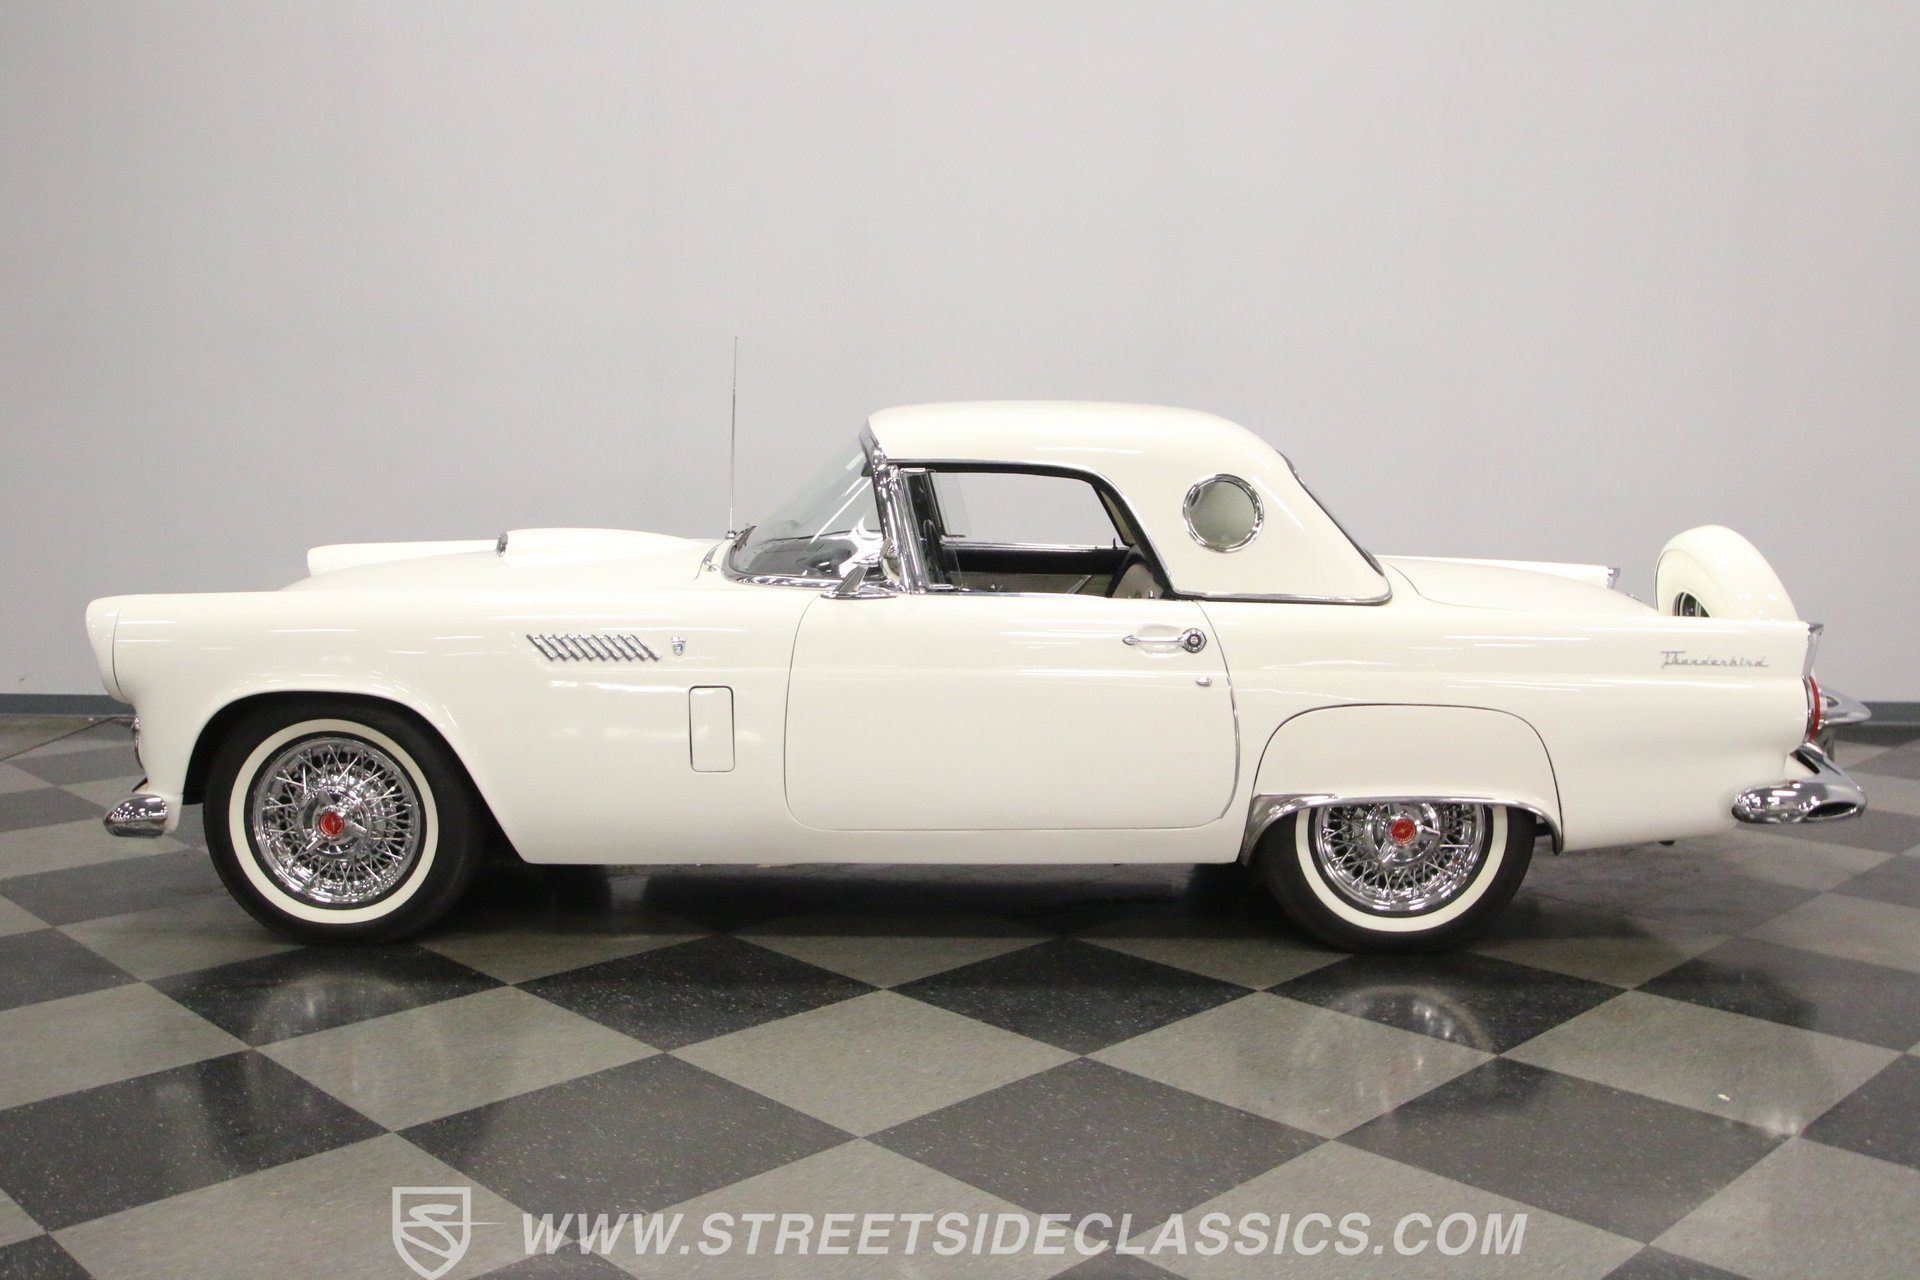 1956 Ford Thunderbird | Classic Cars for Sale - Streetside Classics